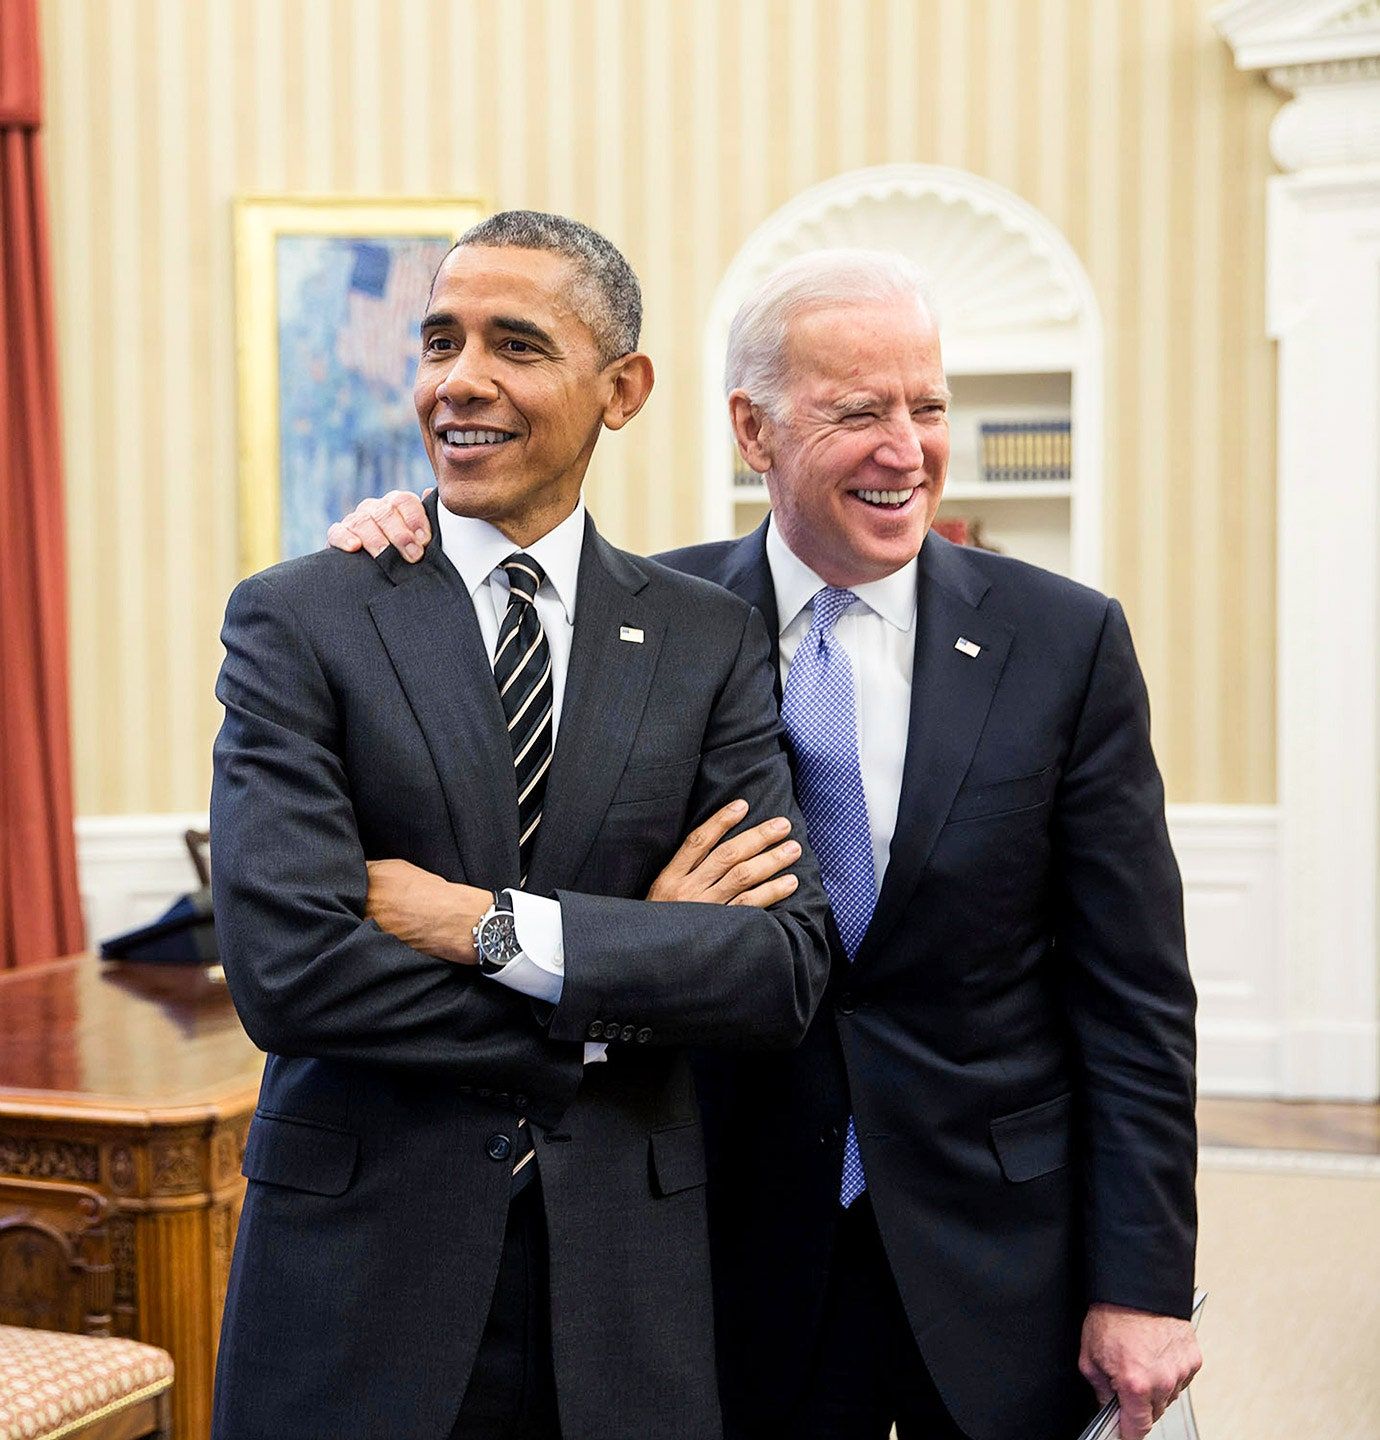 Barack Obama and Joe Biden: The Ultimate Friendship